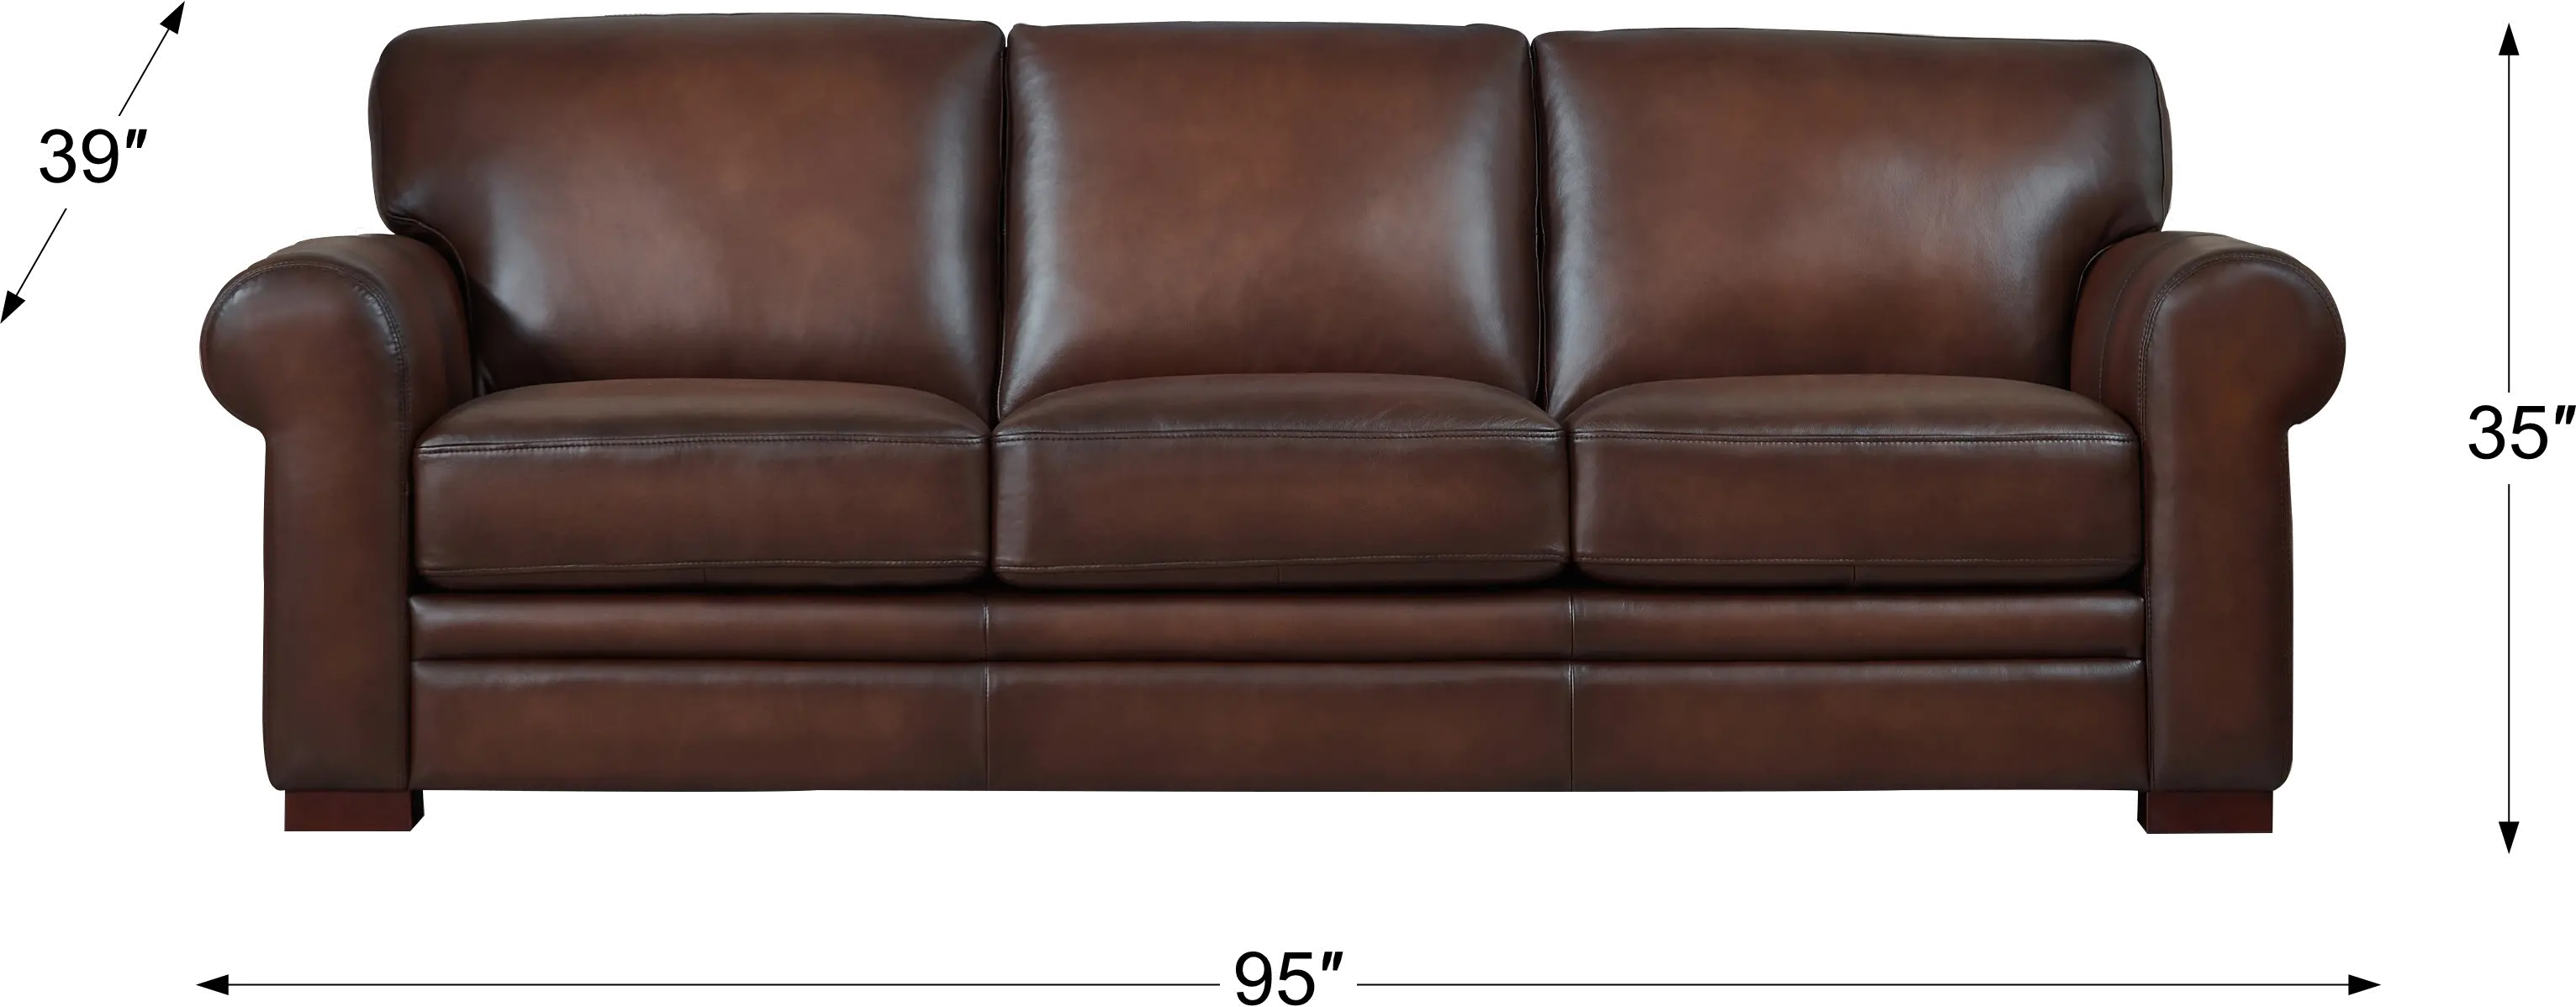 Eglinton Brown Leather 4 Piece Living Room Set